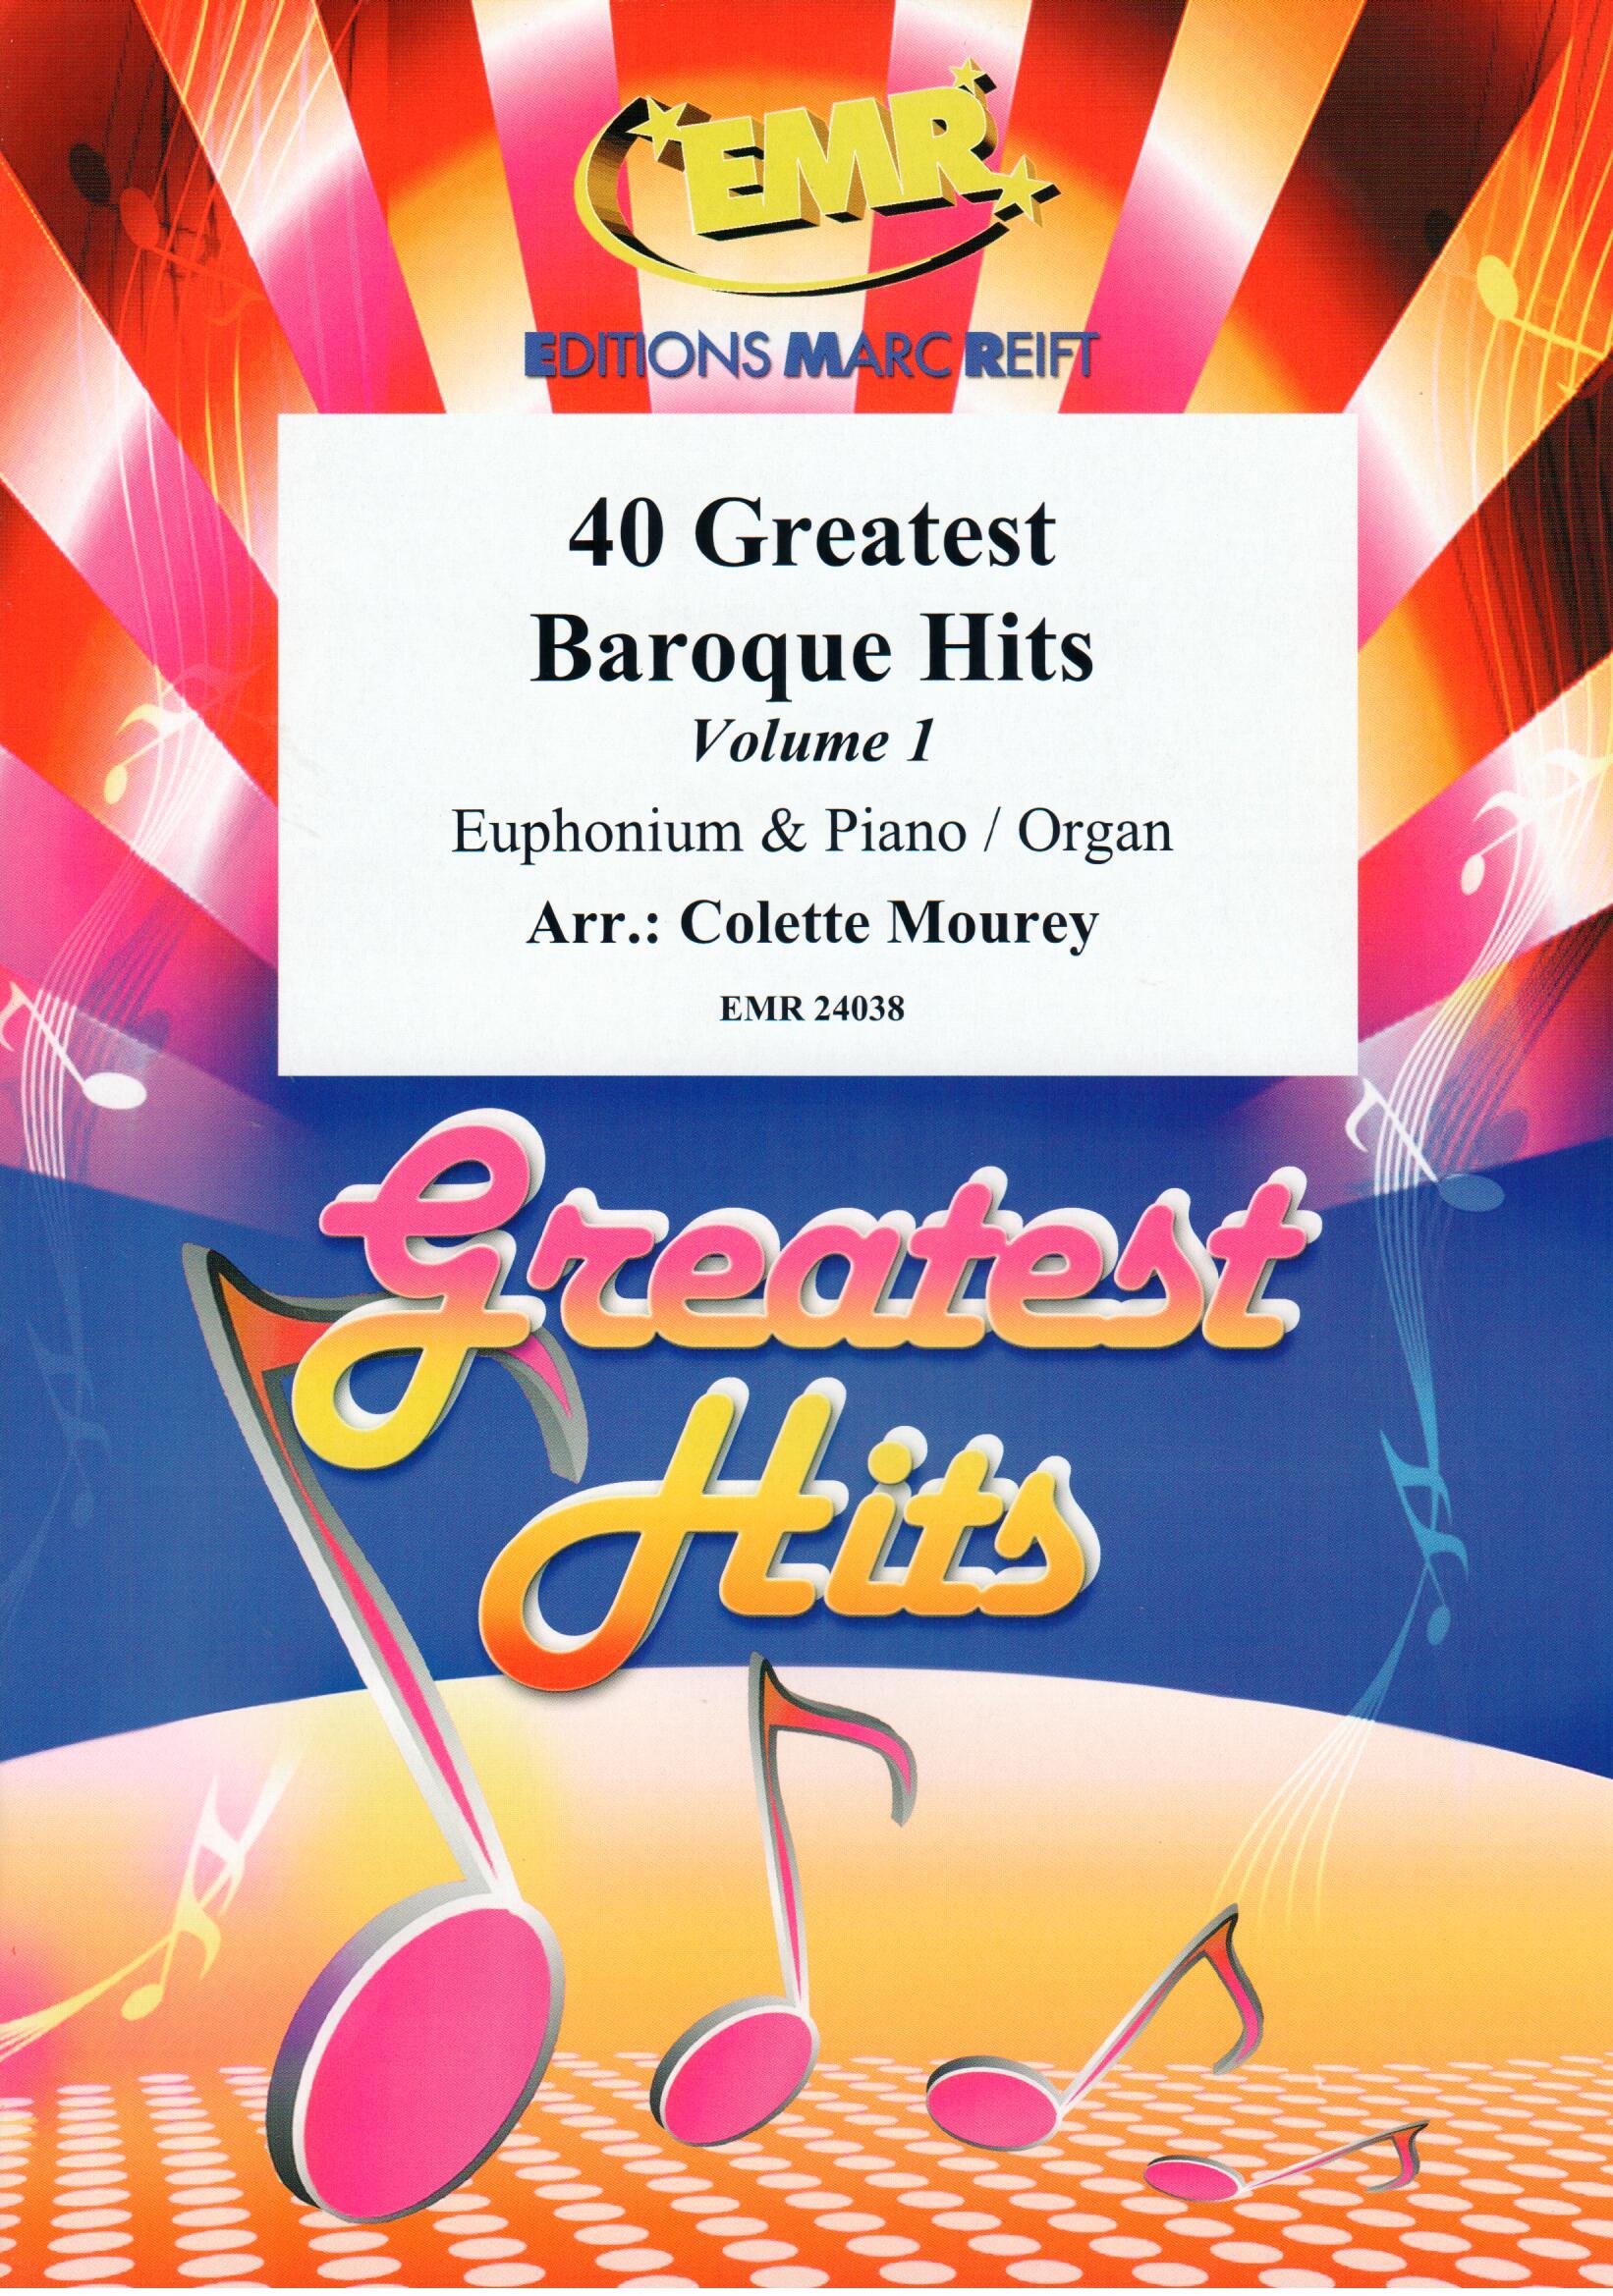 40 GREATEST BAROQUE HITS VOLUME 1, SOLOS - Euphonium